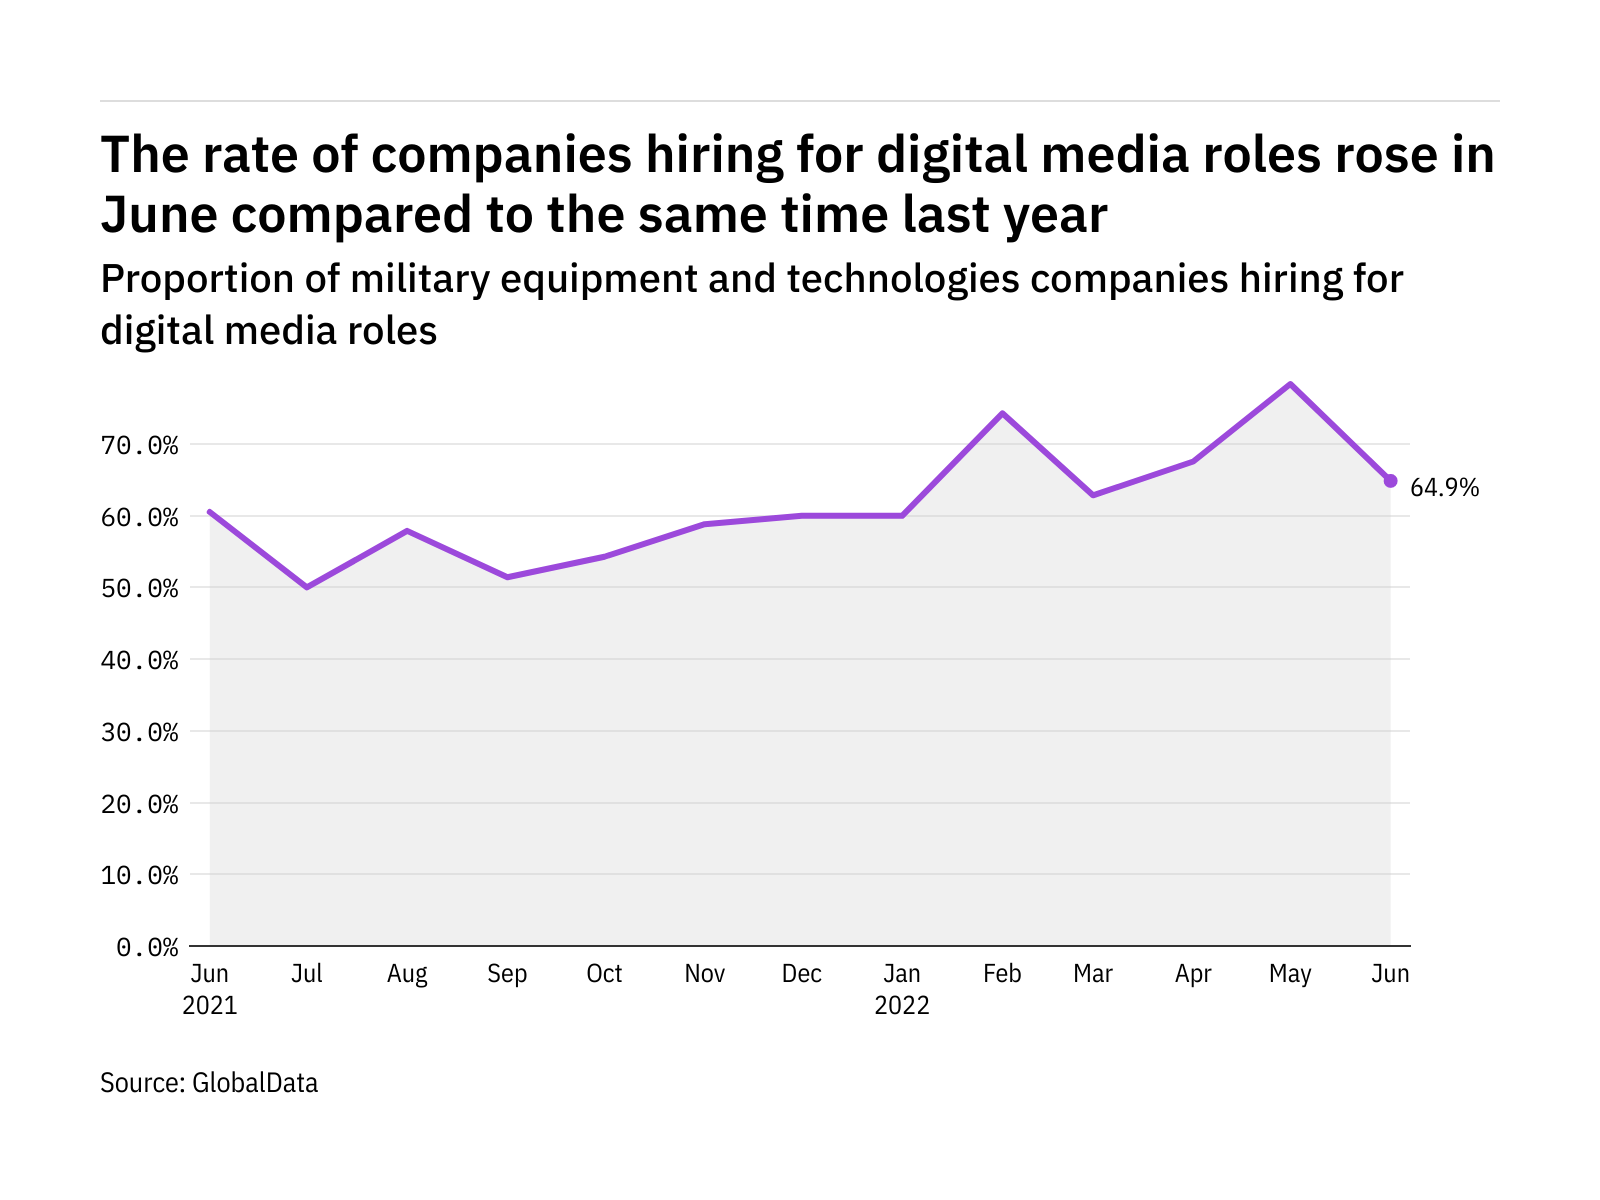 Digital media hiring levels in the military industry rose in June 2022